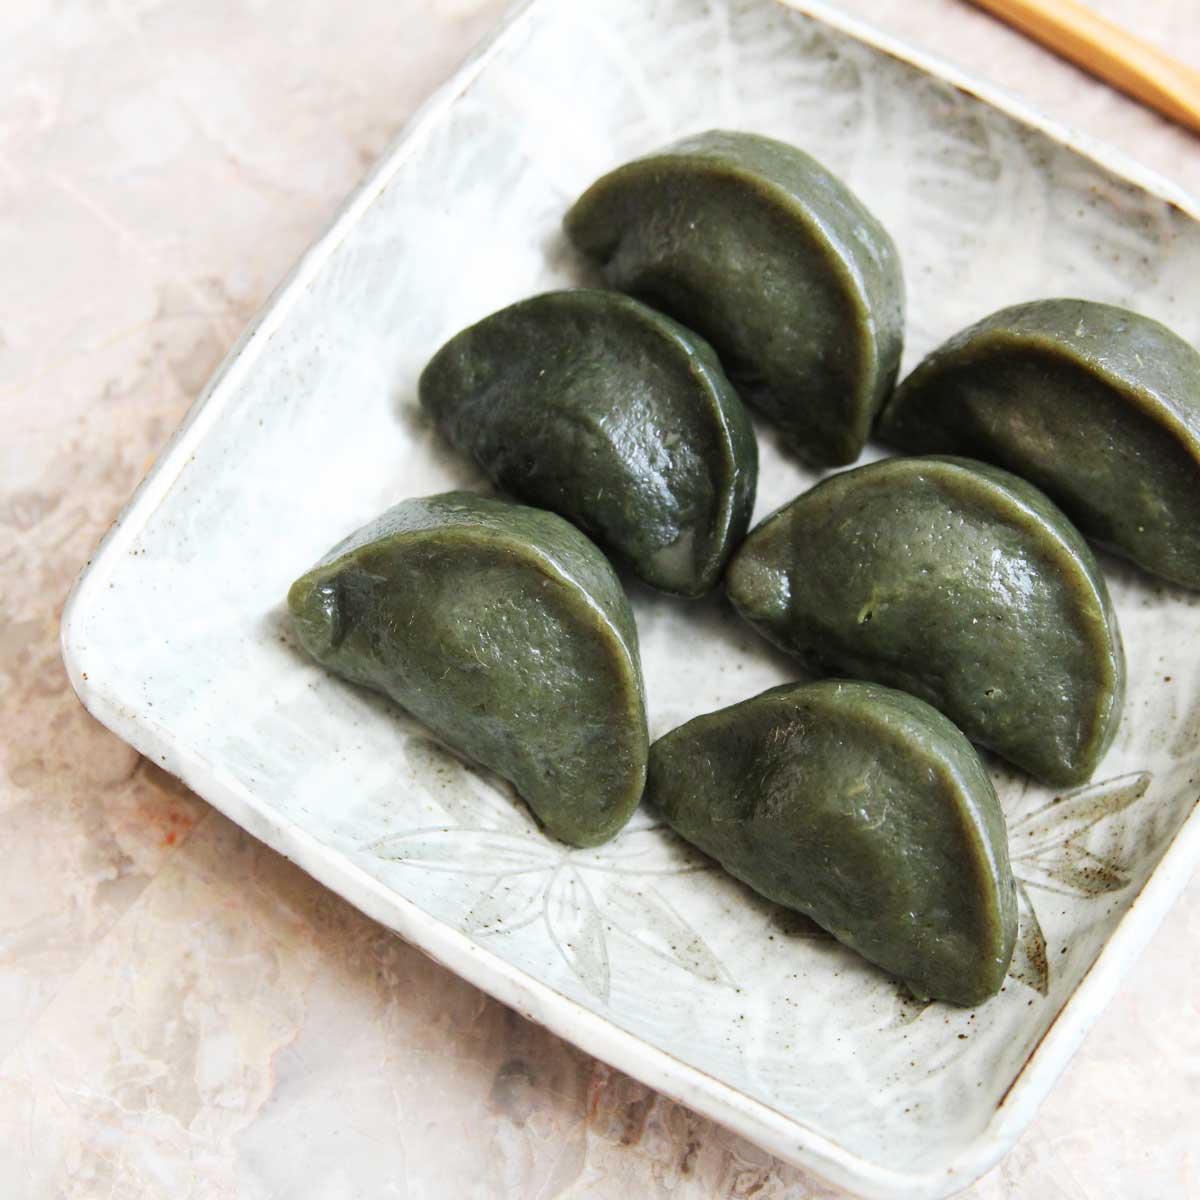 Healthier Mugwort Songpyeon made with Sweet Potatoes (고구마 쑥송편) - Vegan Filling